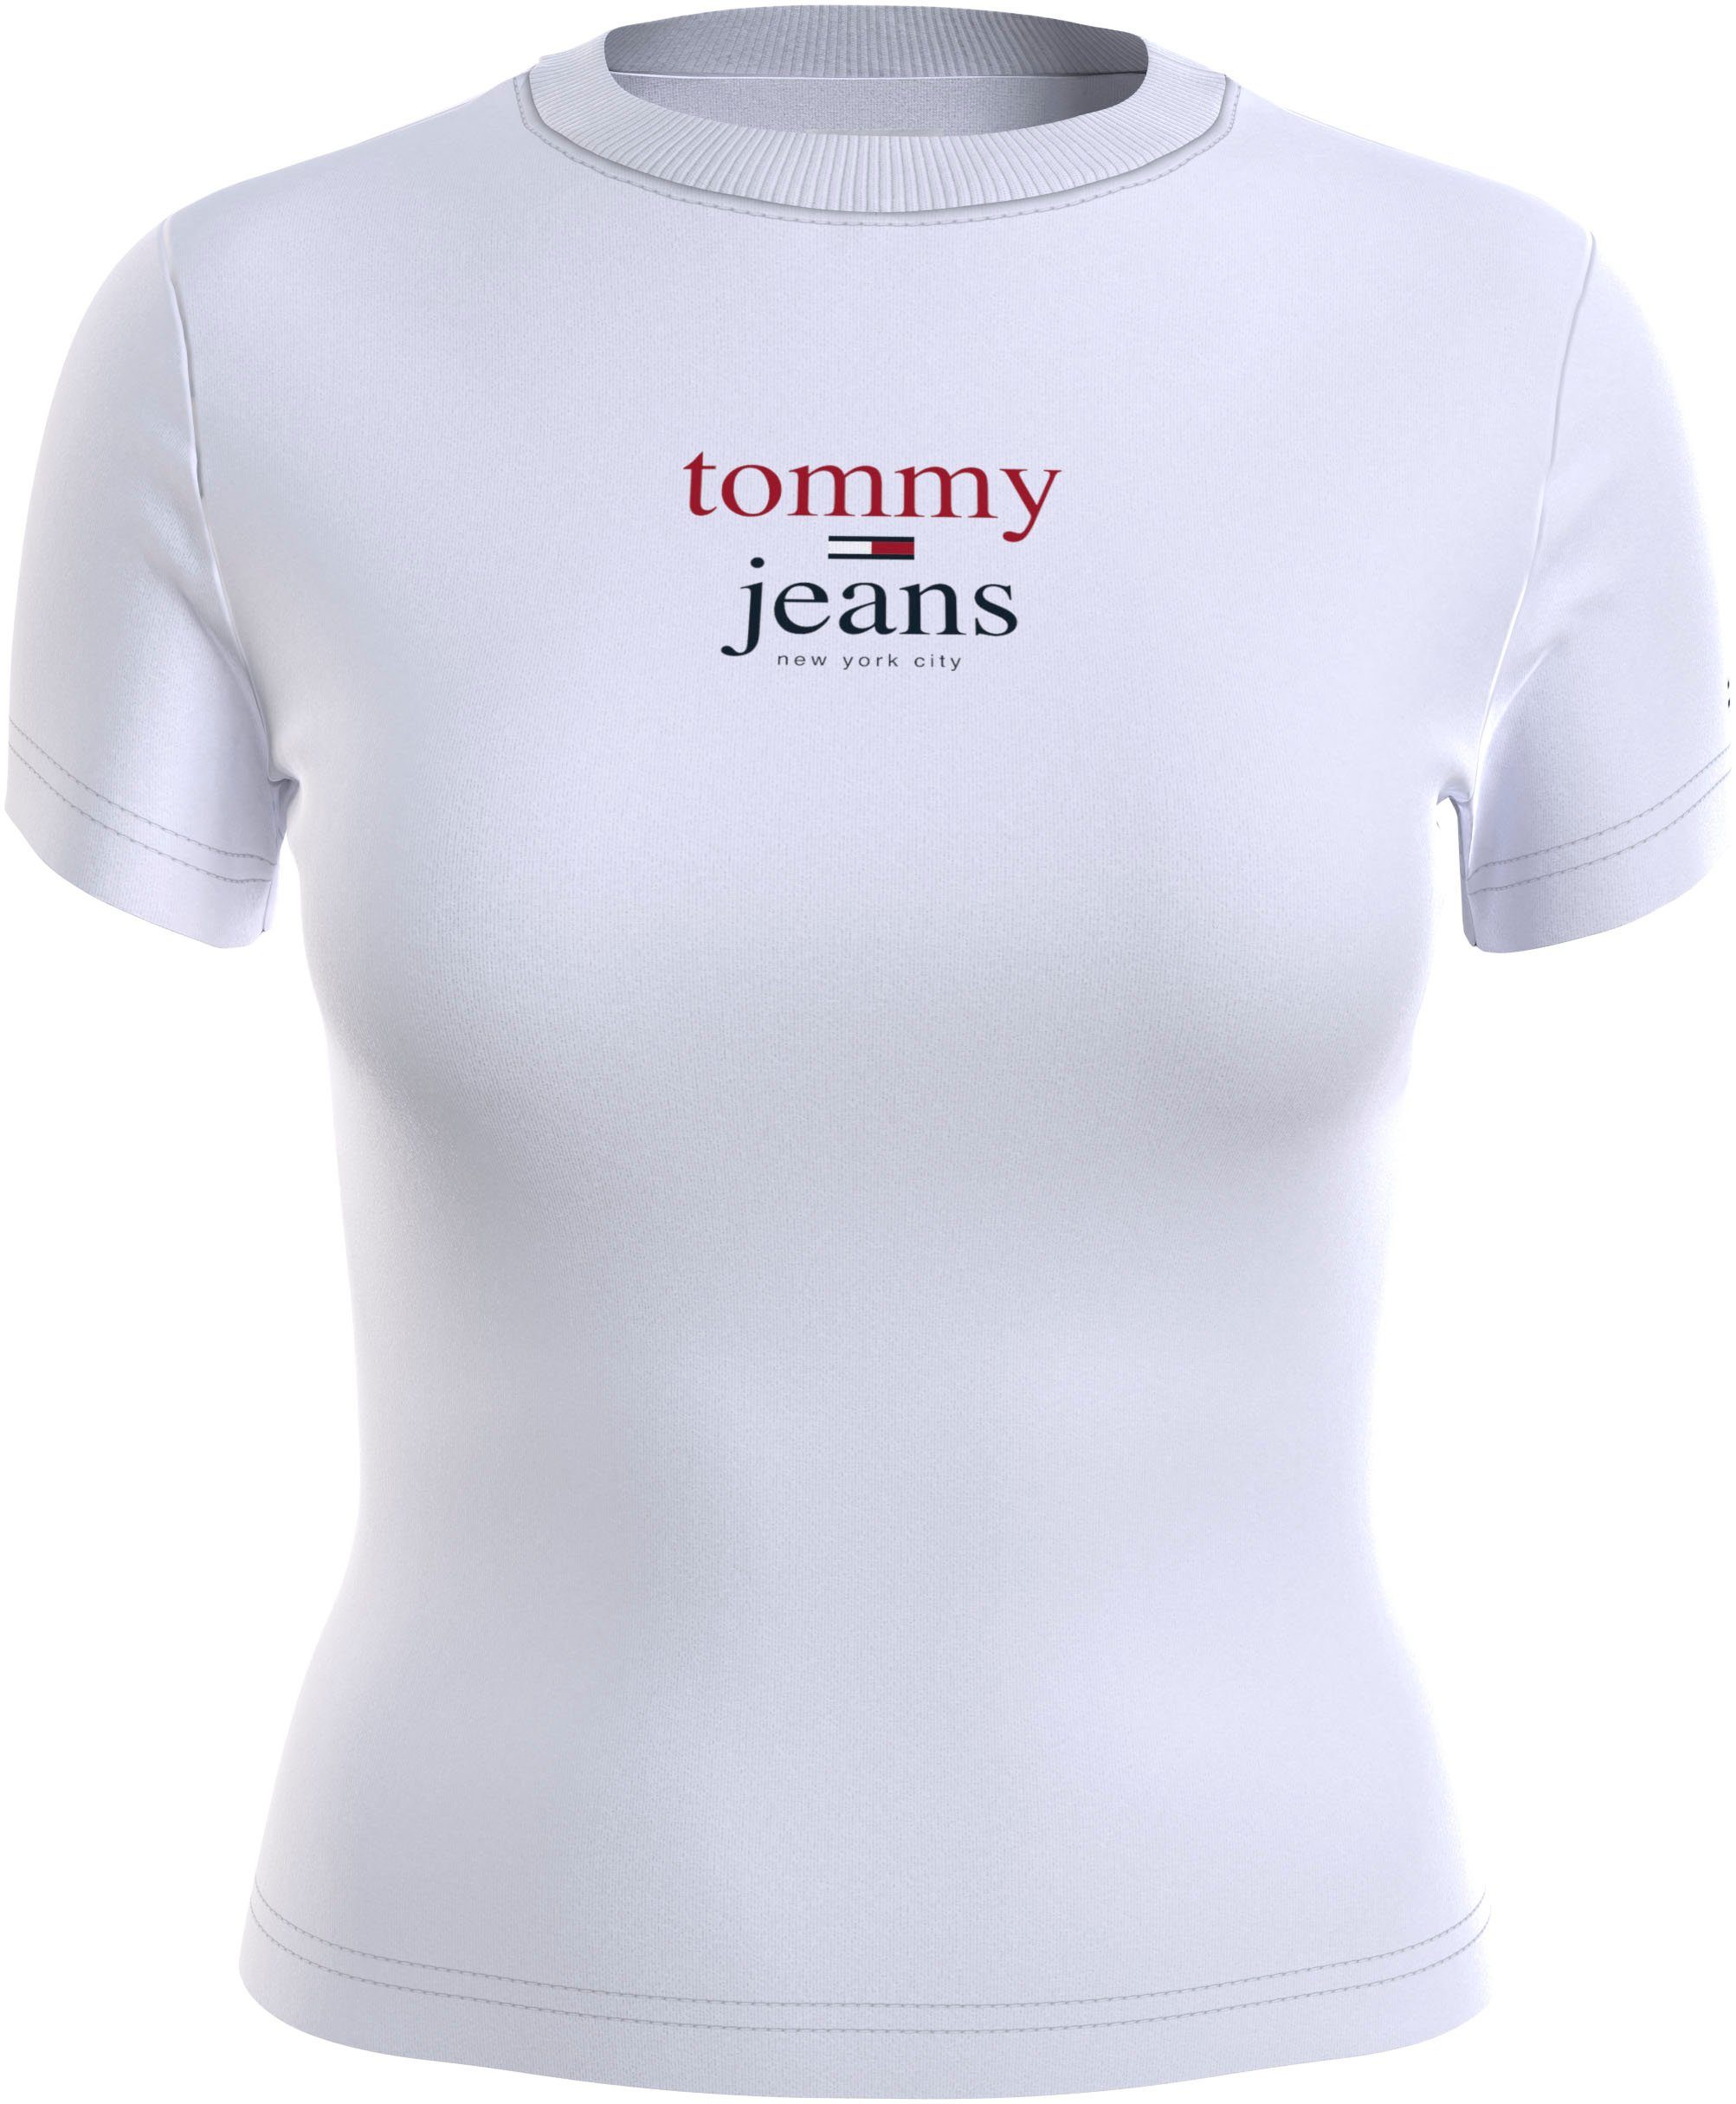 ESSENTIAL Jeans Jeans TJW 2 Basic-Style White Tommy Schriftzug im SS Tommy Kurzarmshirt LOGO BABY mit